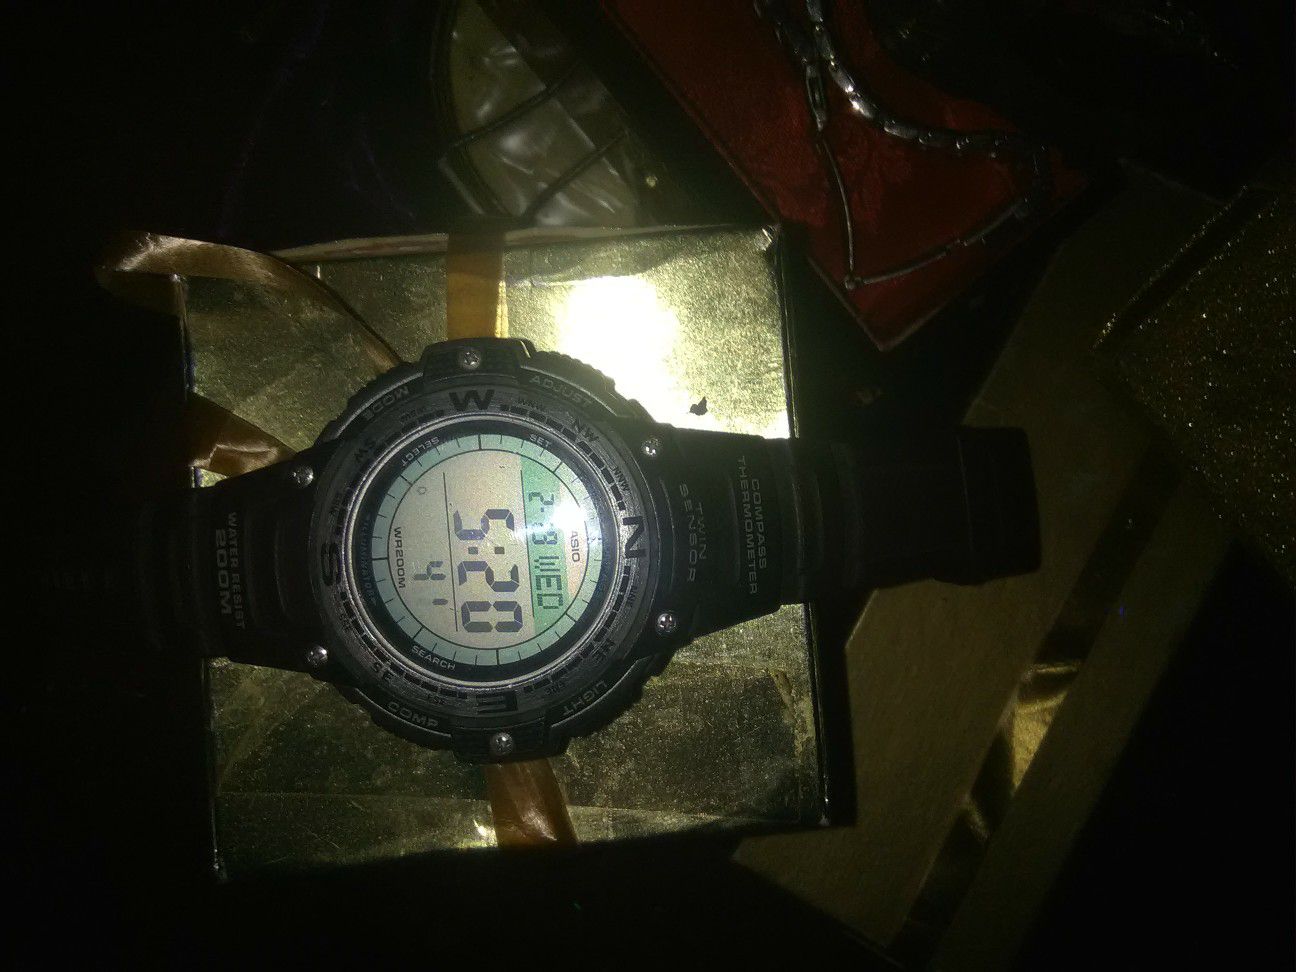 Casio men's digital watch